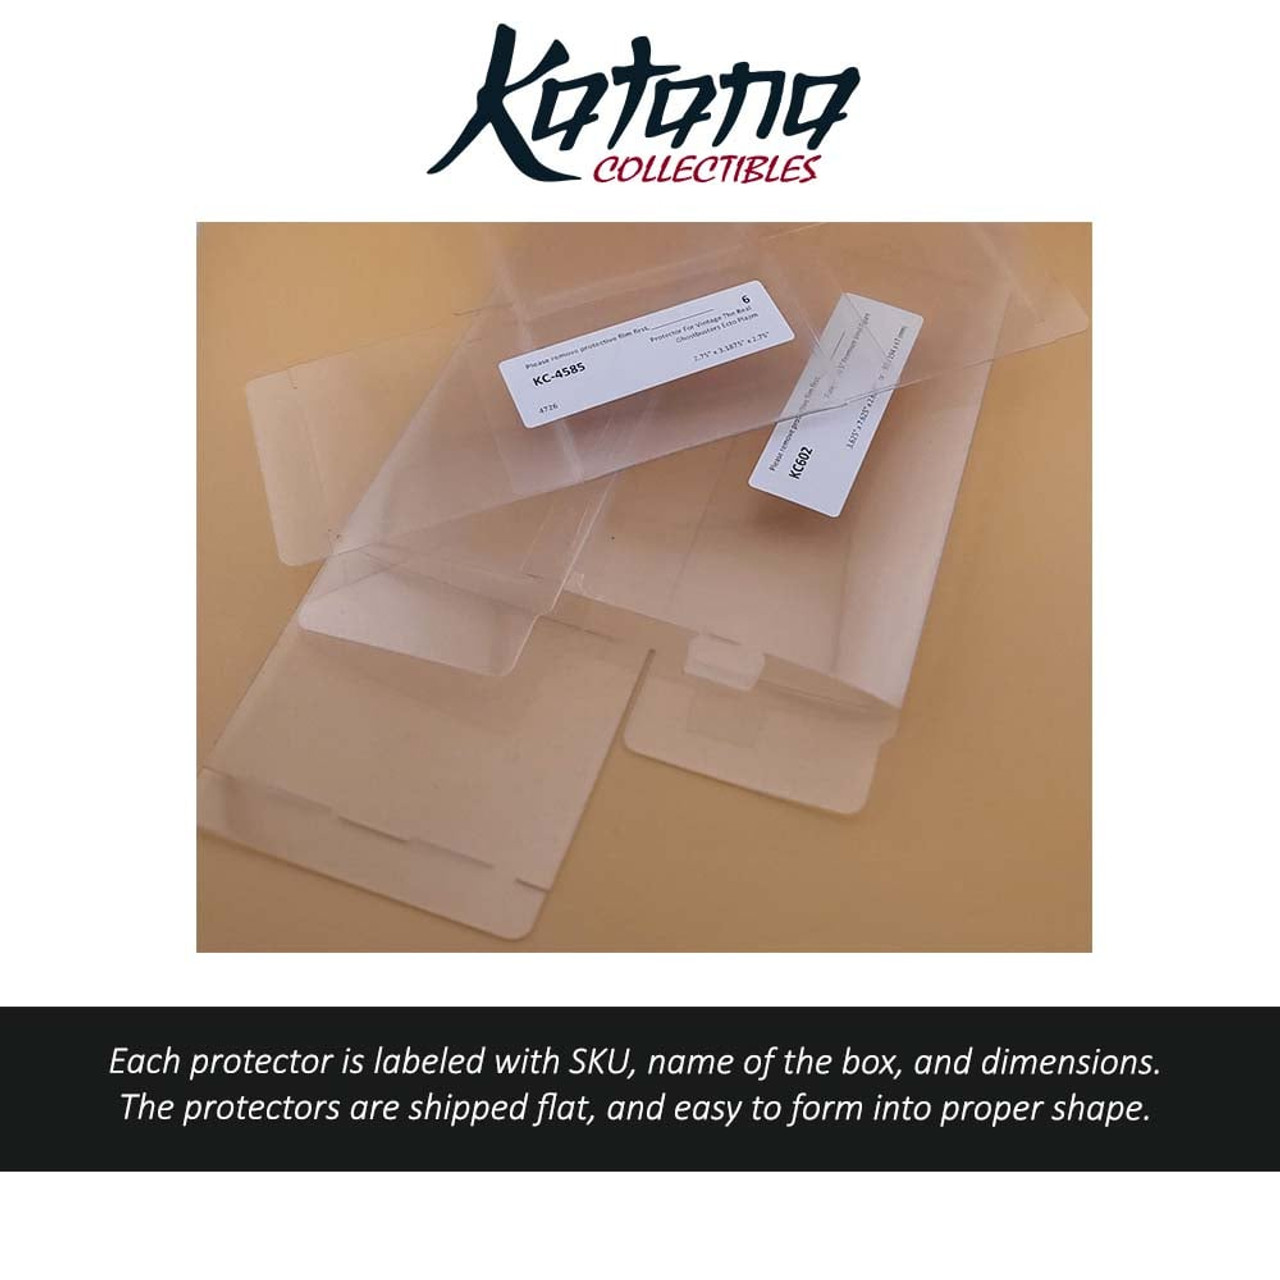 Katana Collectibles Protector For AHA-FD770 (LG MP3 WALKMAN)